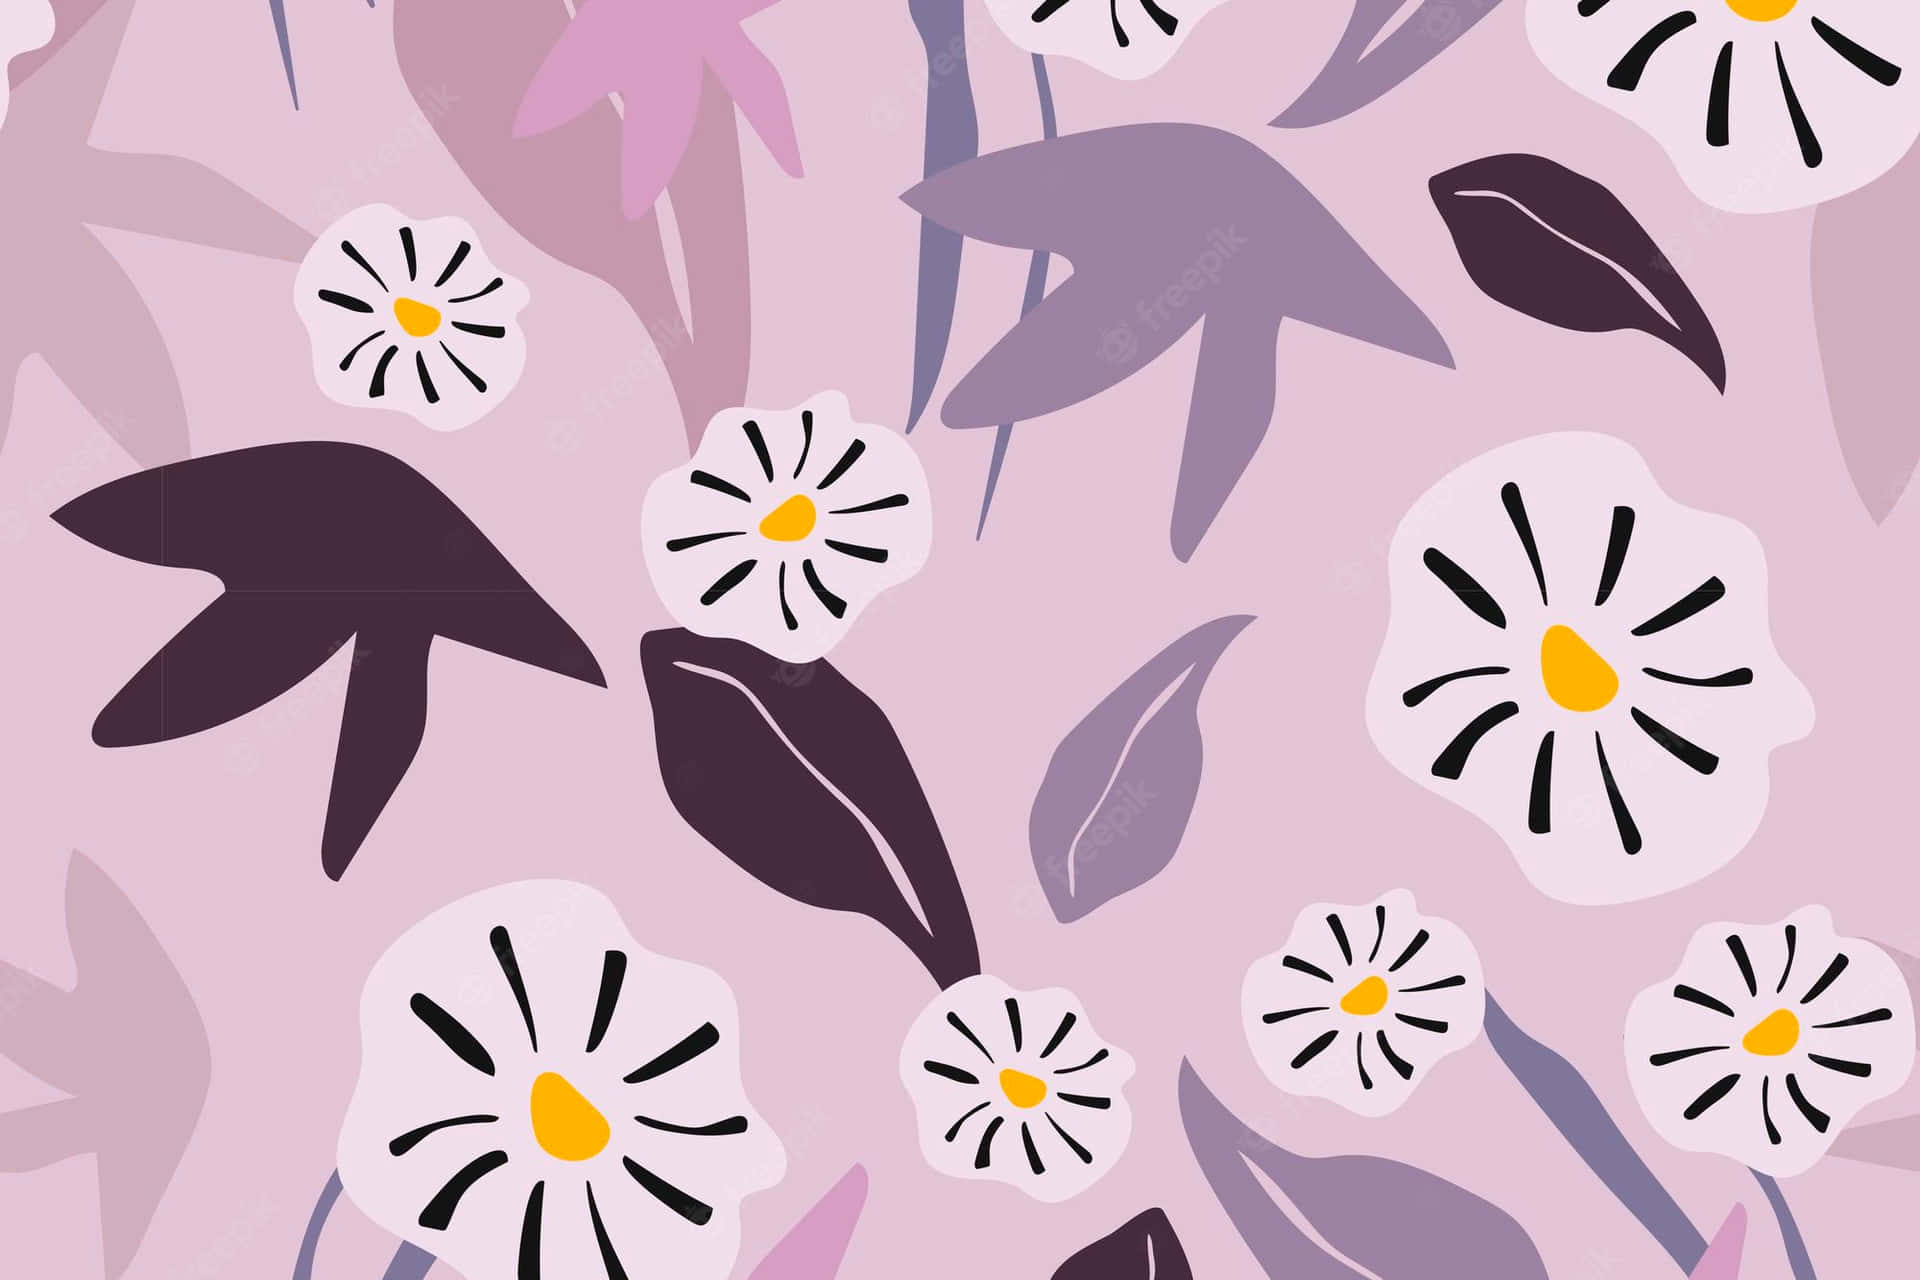 Vibrant Lavender Aesthetic for Your Laptop Wallpaper